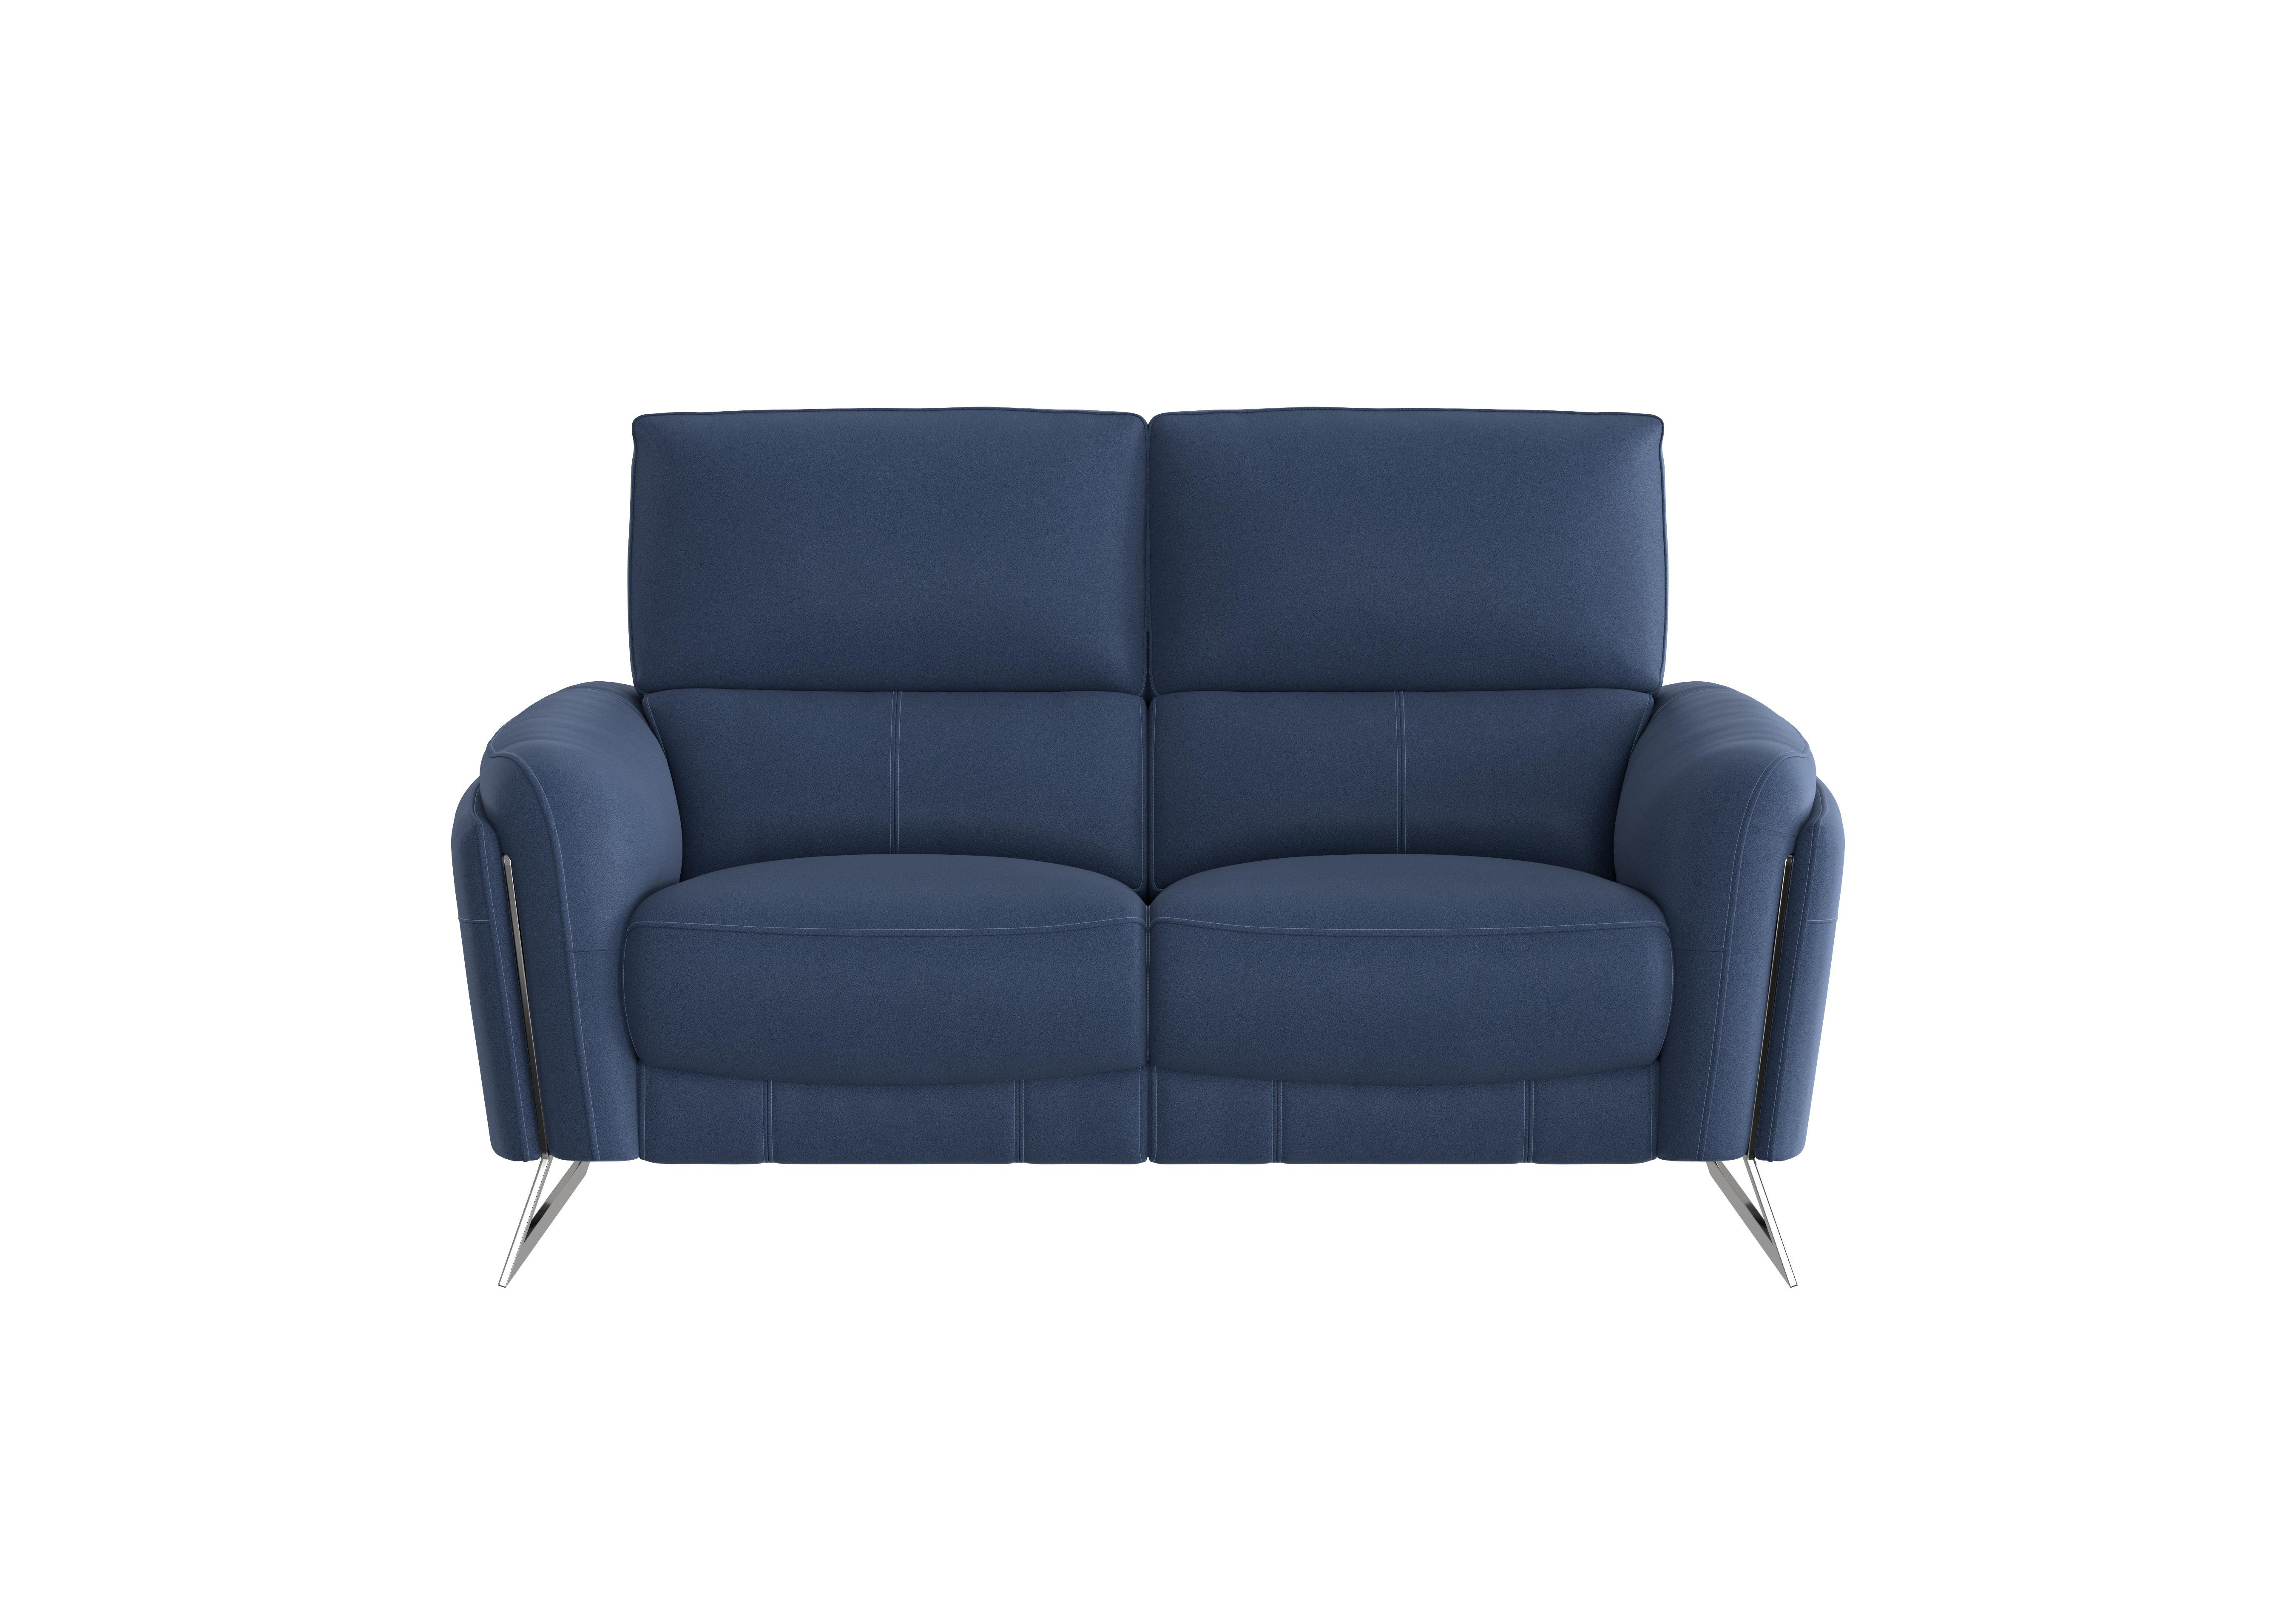 Amarilla 2 Seater Fabric Sofa in Bfa-Blj-R10 Blue on Furniture Village